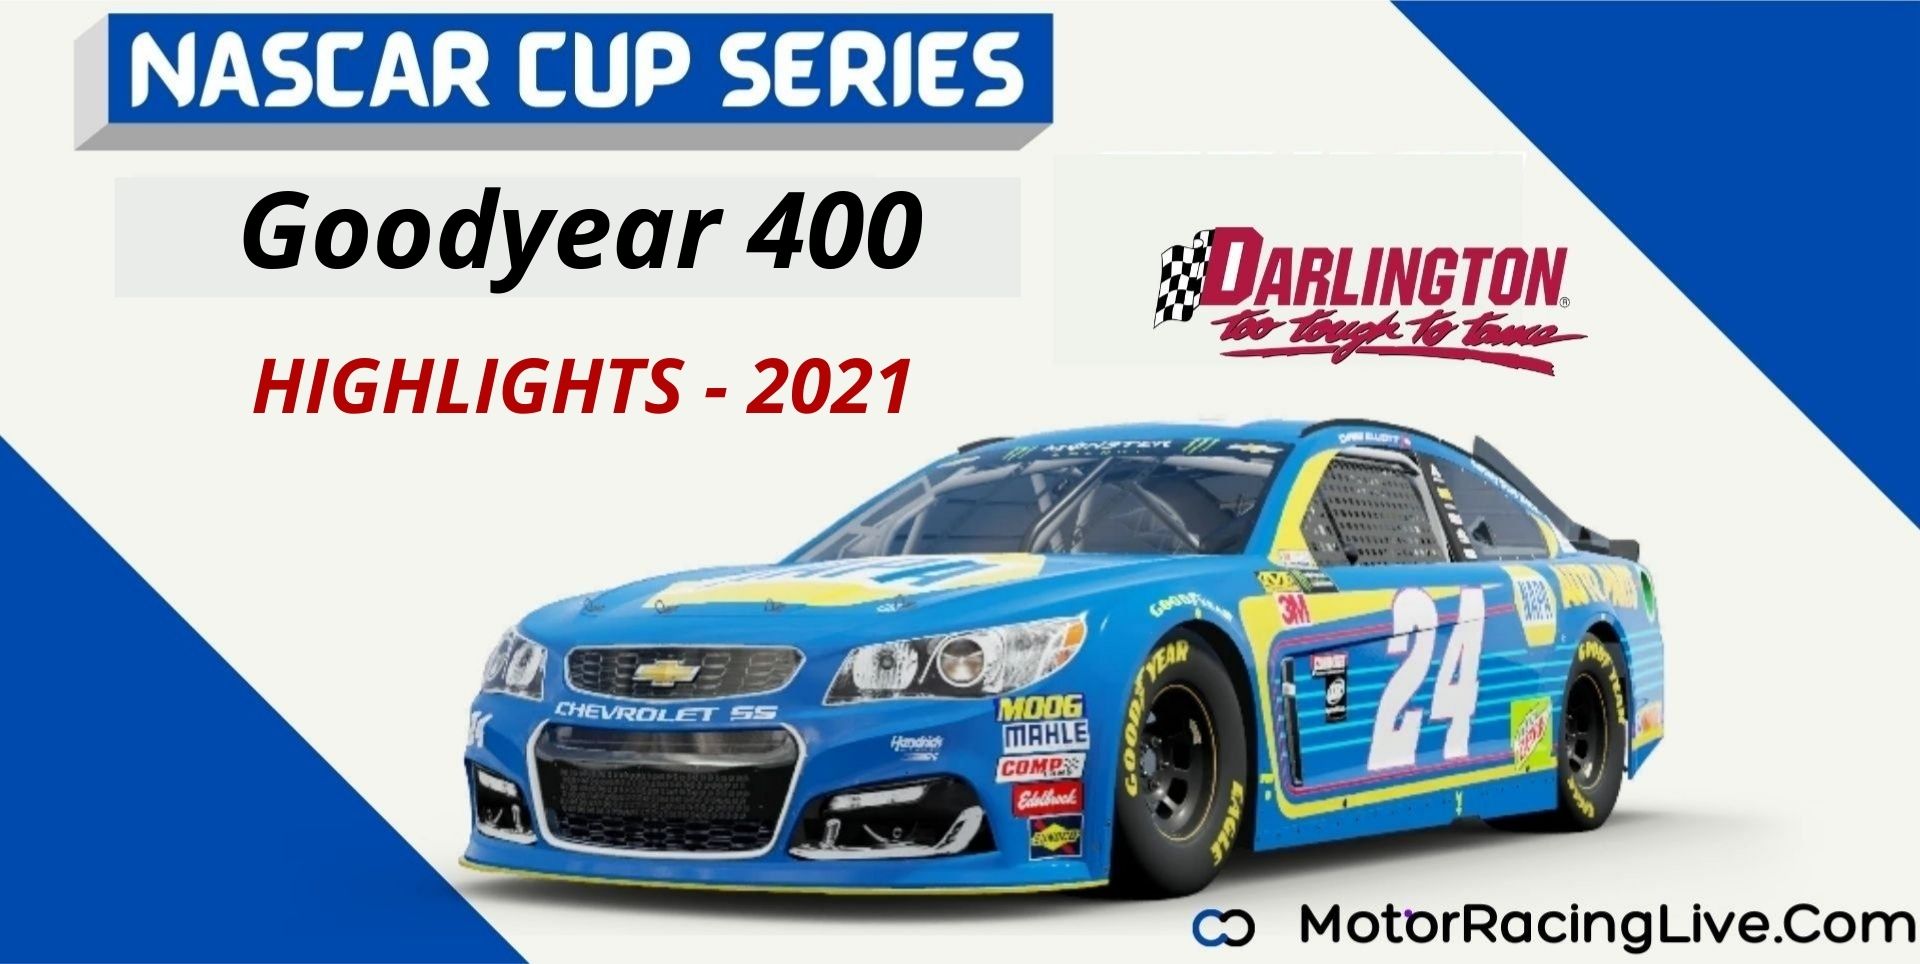 Goodyear 400 Highlights 2021 NASCAR Cup Series